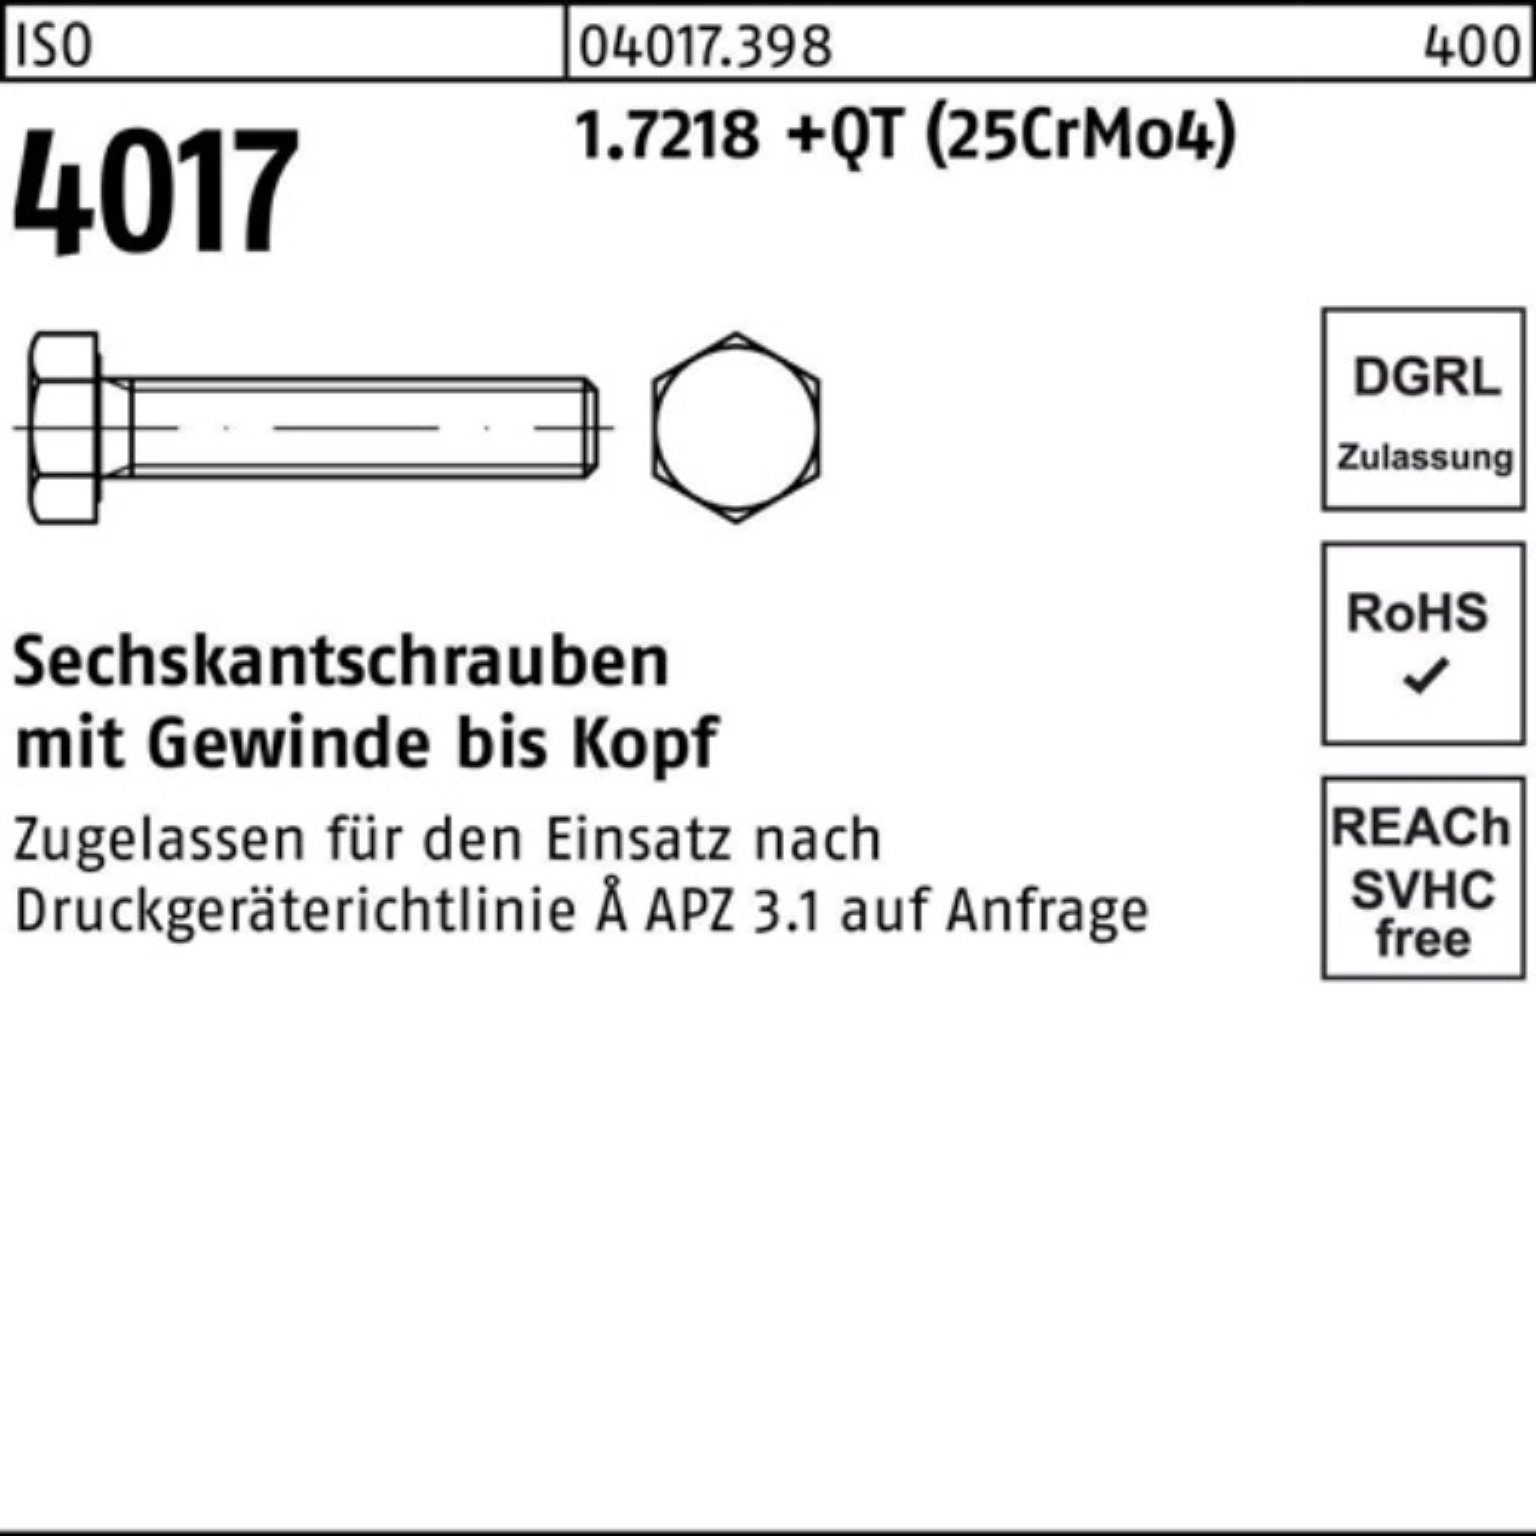 ISO 100er Bufab Sechskantschraube Pack +QT 4017 Sechskantschraube M33x 1.7218 130 (25CrMo4) VG